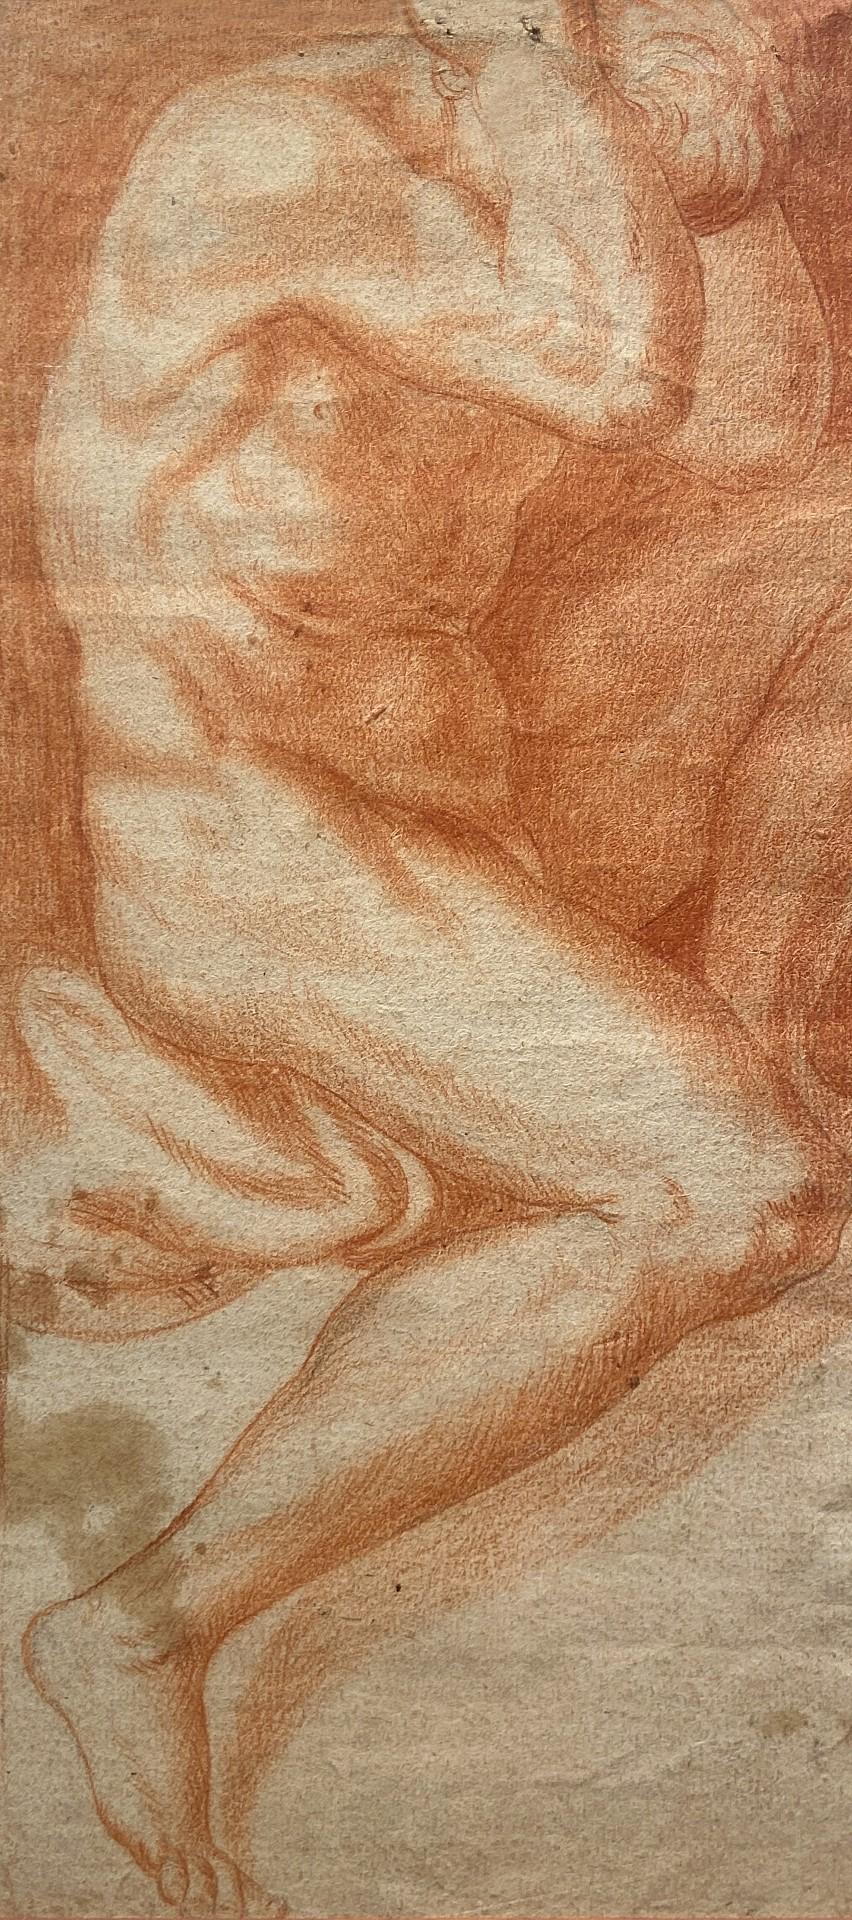 Annibale Carracci Nude – The Captive, Studie eines nackten Mannes, Rötelstudie, Carracci Gallery